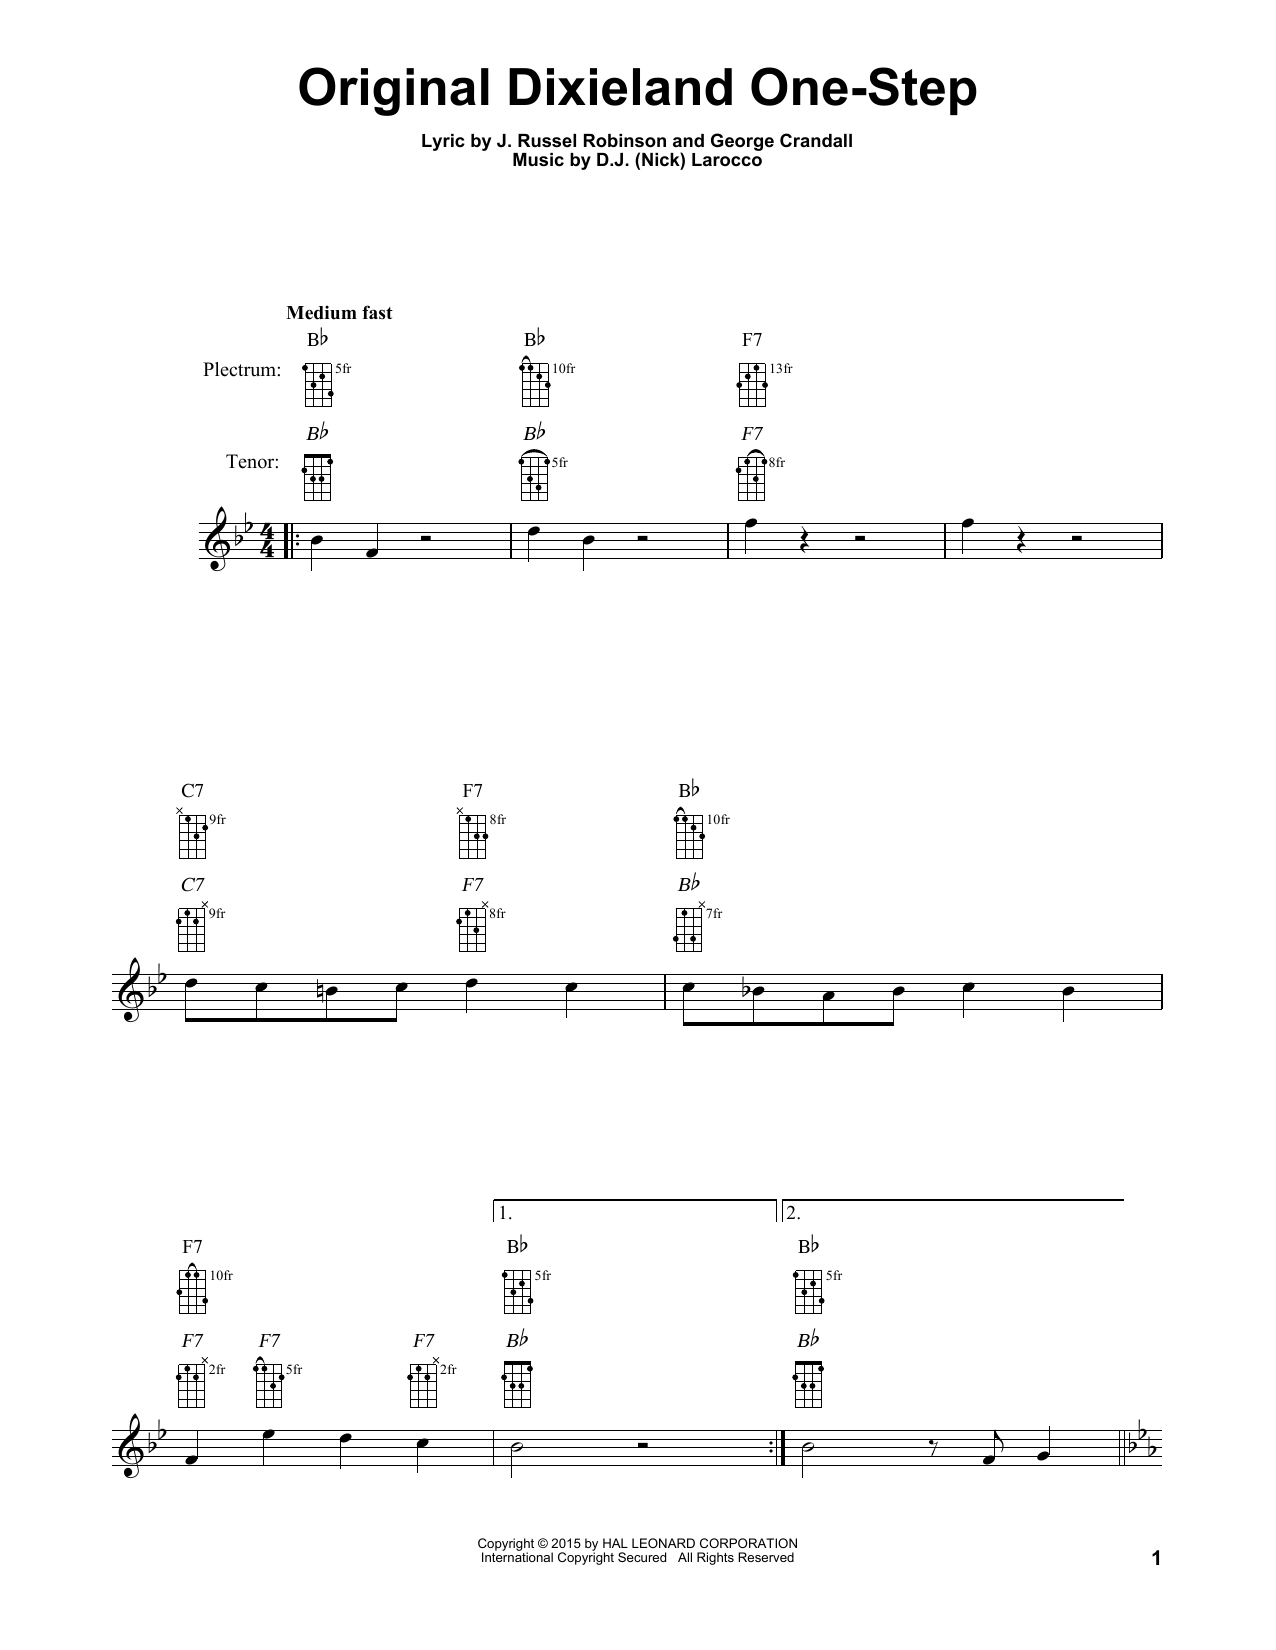 George Crandall Original Dixieland One-Step Sheet Music Notes & Chords for Banjo - Download or Print PDF